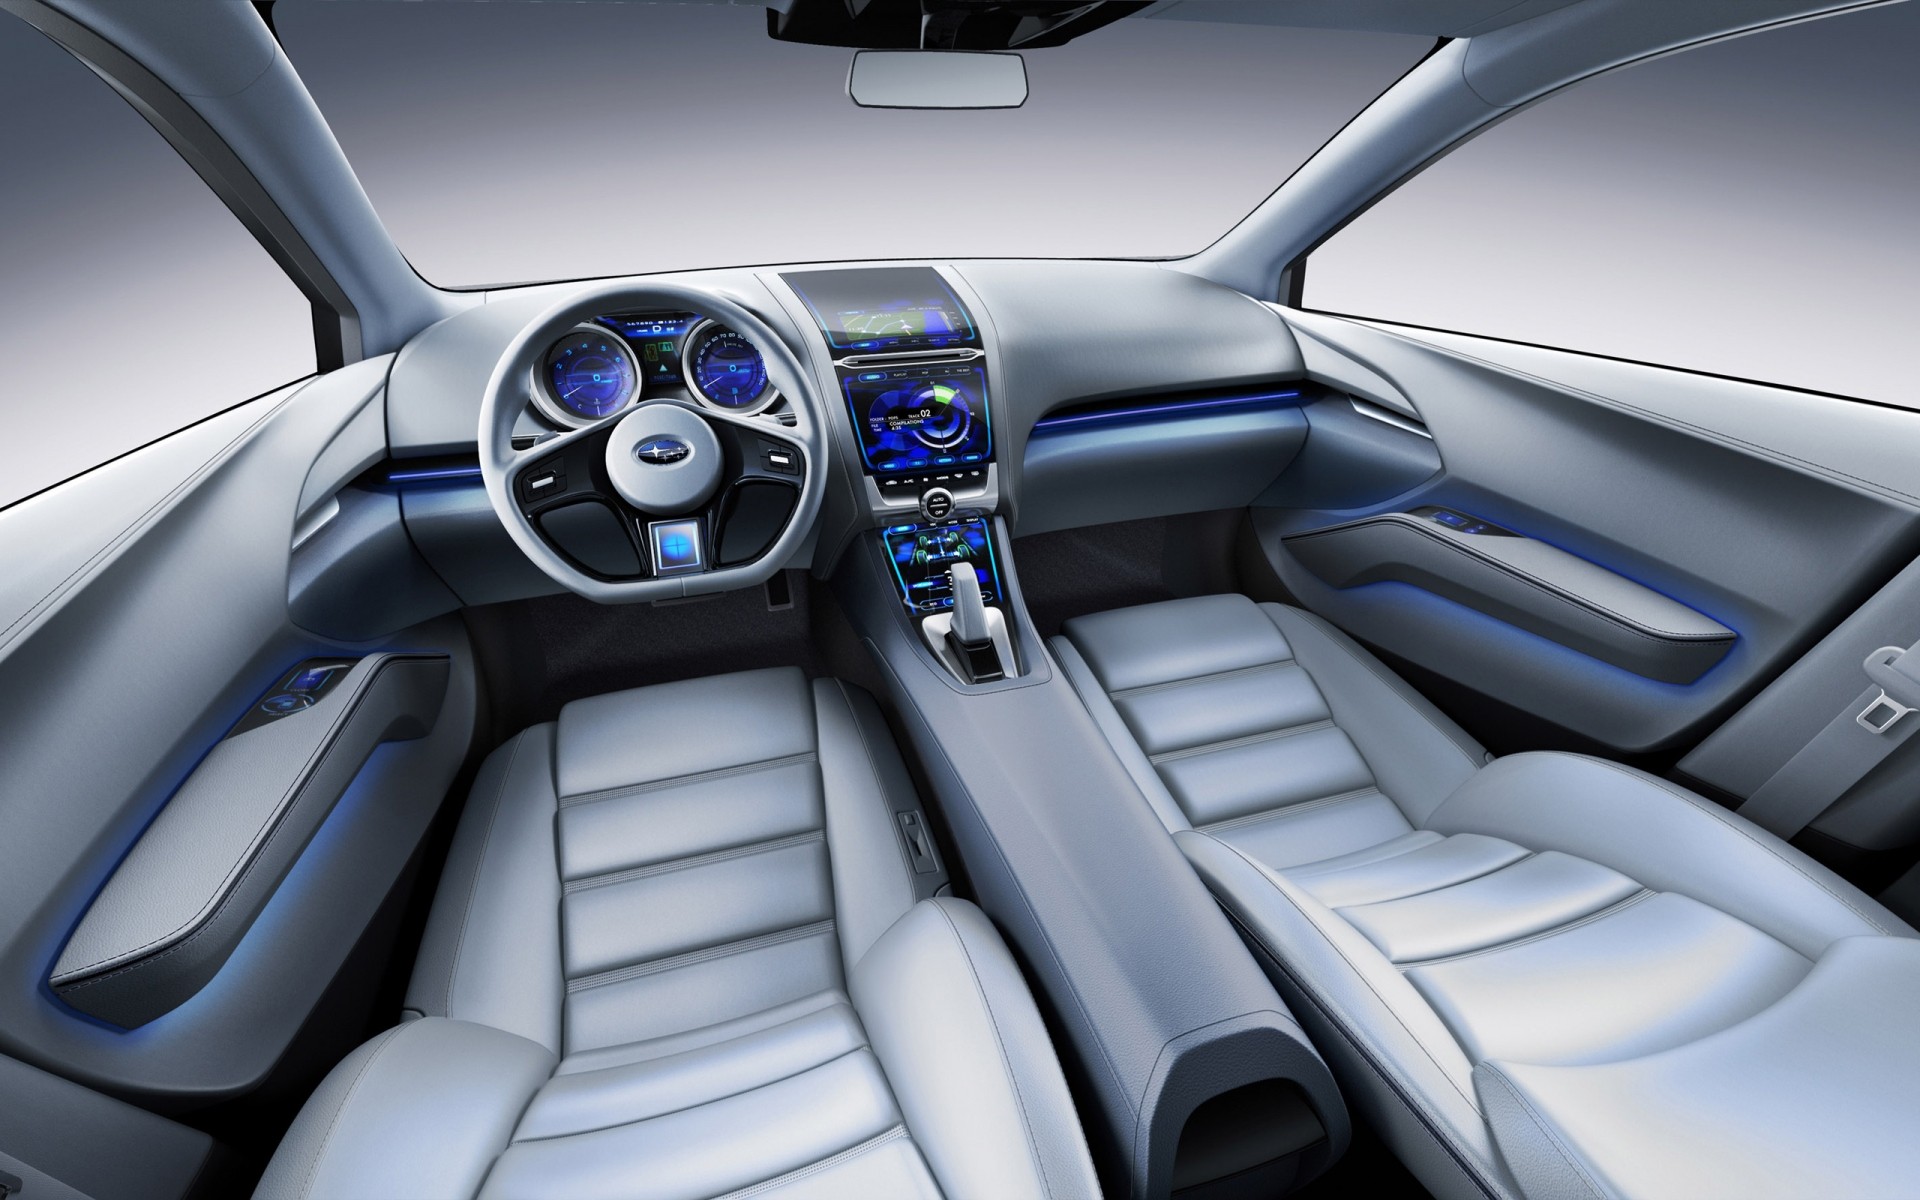 concept cars car vehicle transportation system fast drive wheel chrome power glazed guidance speed automotive technology subaru concept car